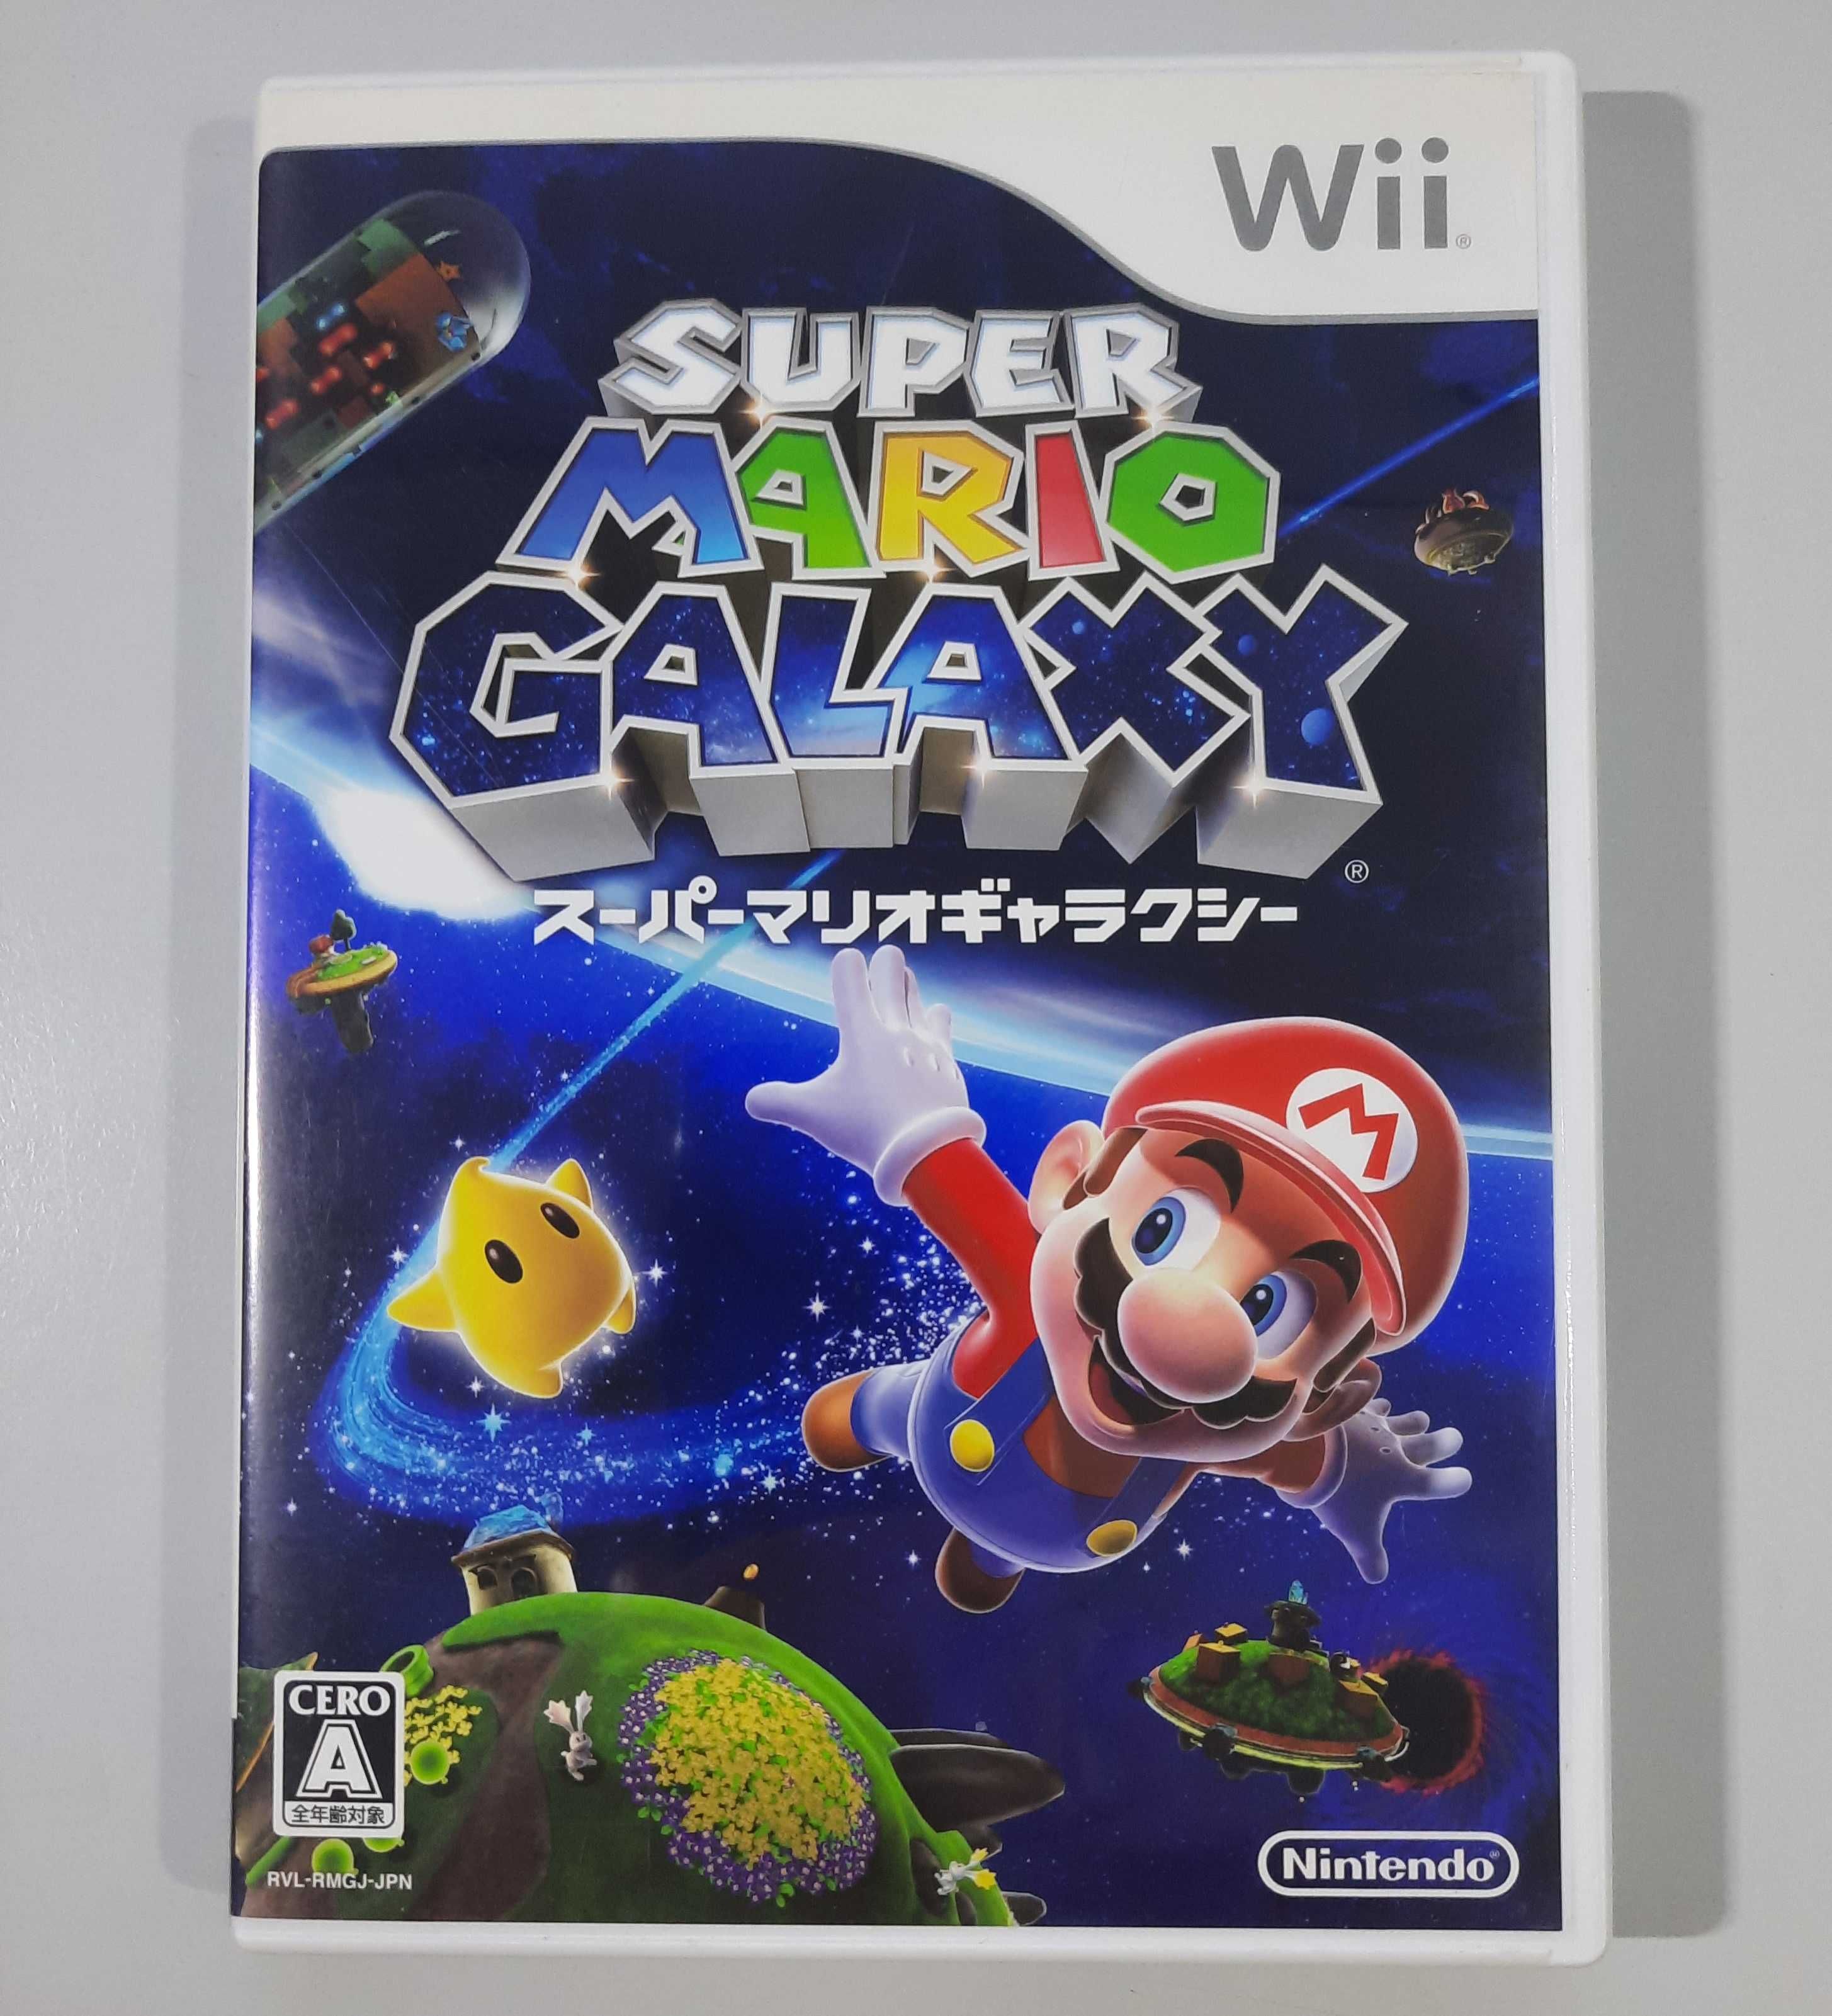 Super Mario Galaxy / Wii [NTSC-J]